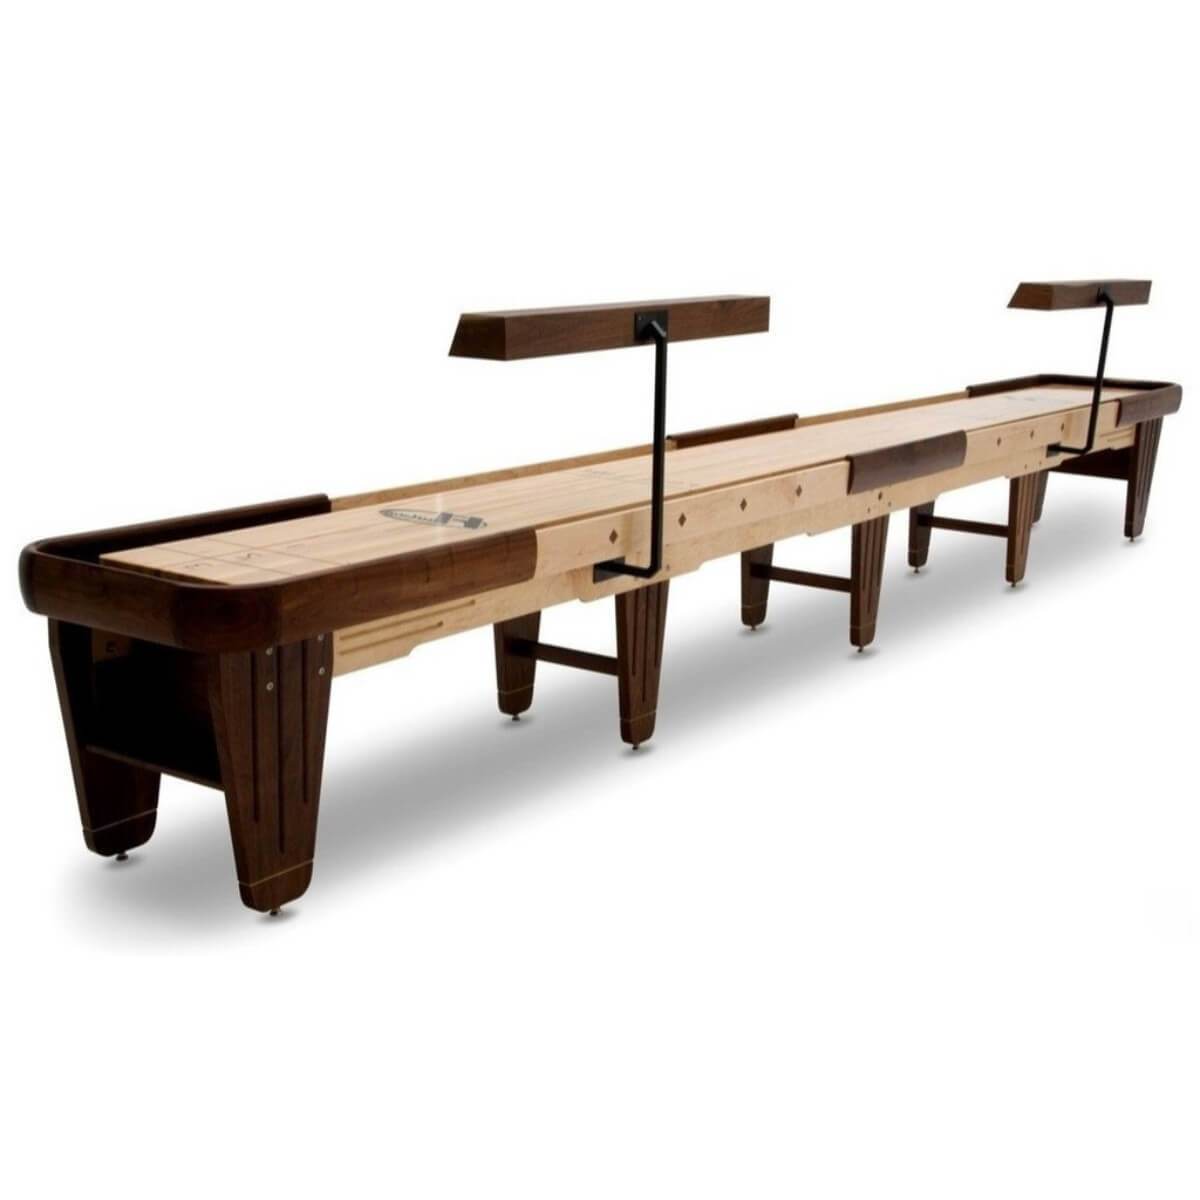 Shuffleboard Table Used Craigslist, Deluxe Maintenance kit will